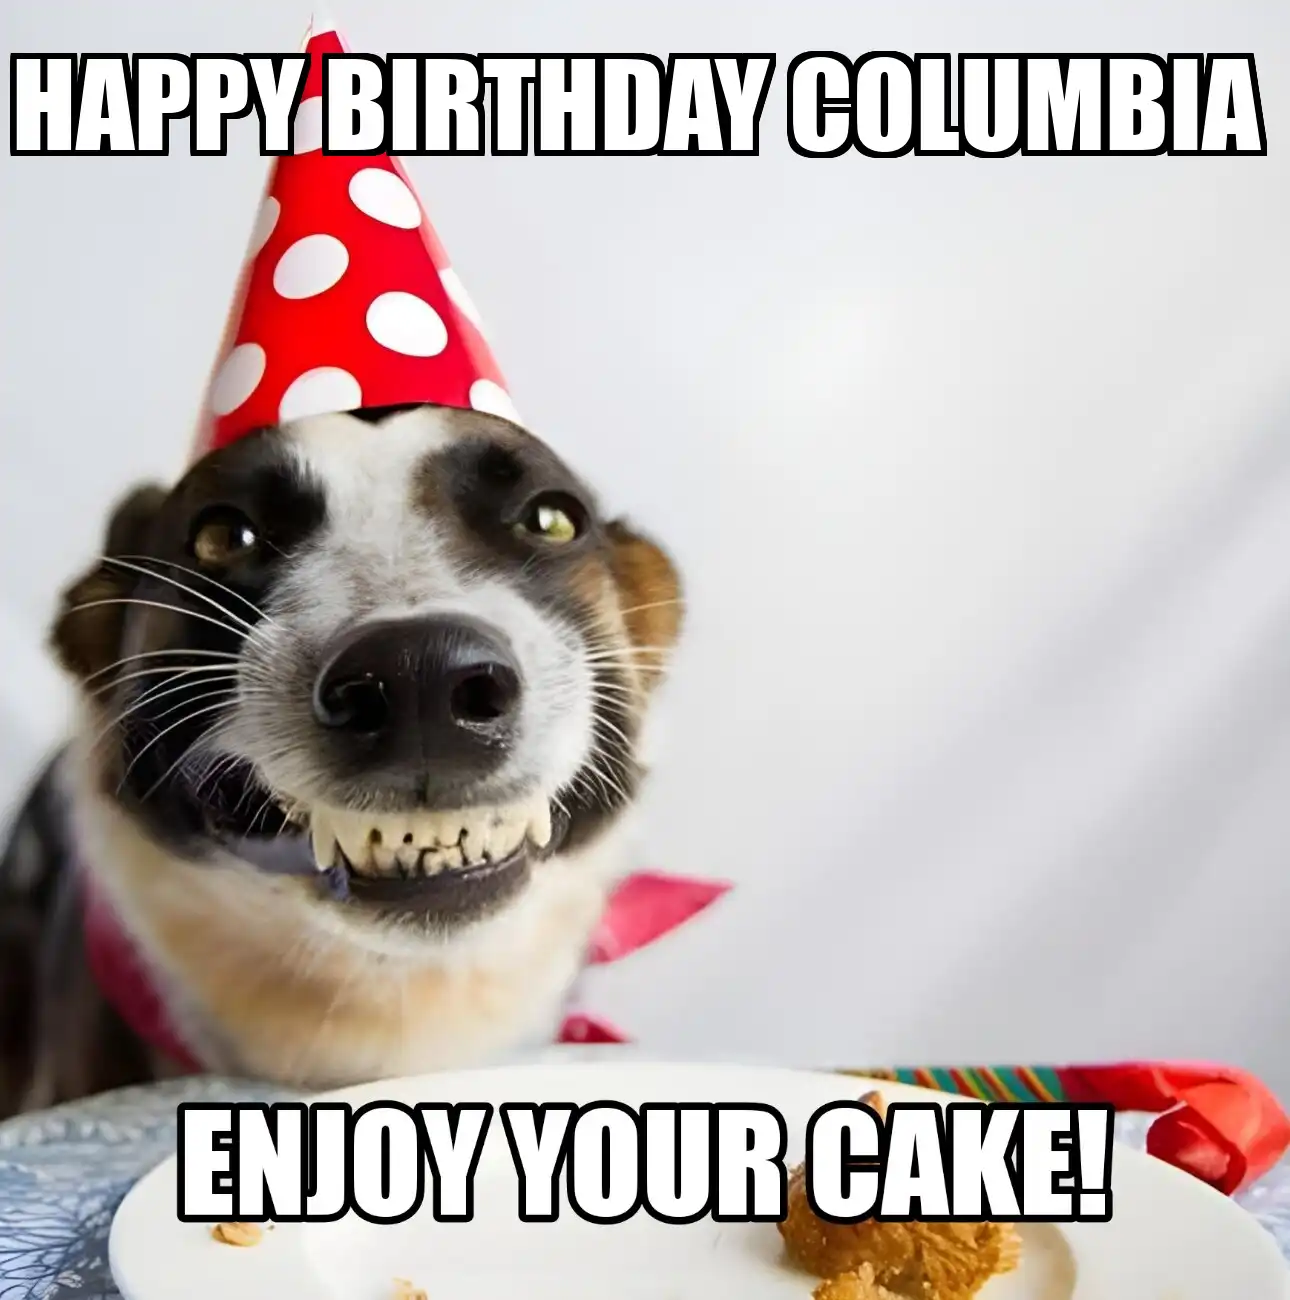 Happy Birthday Columbia Enjoy Your Cake Dog Meme